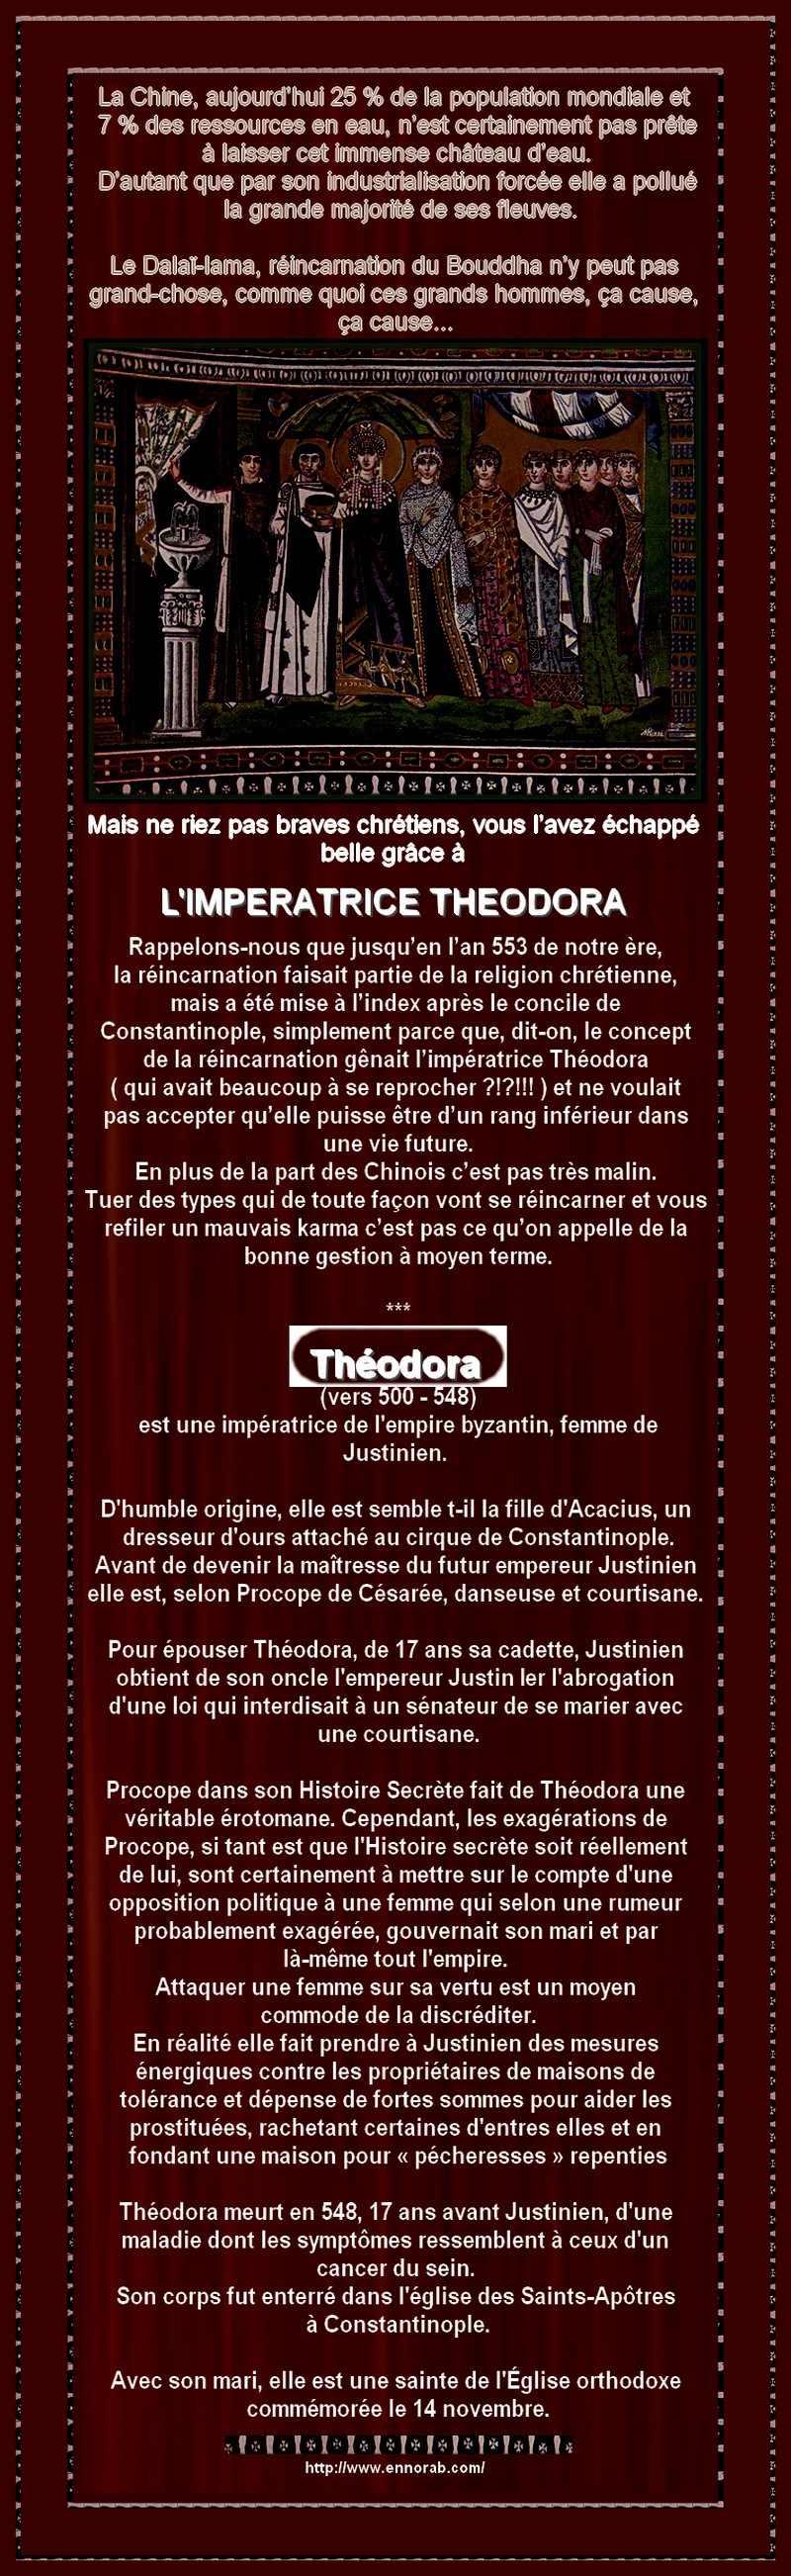 L'IMPERATRICE THEODORA ET LA REINCARNATION QUI FAISAIT PARTIE DE LA CHRETIENTE   1203121037571457979570838